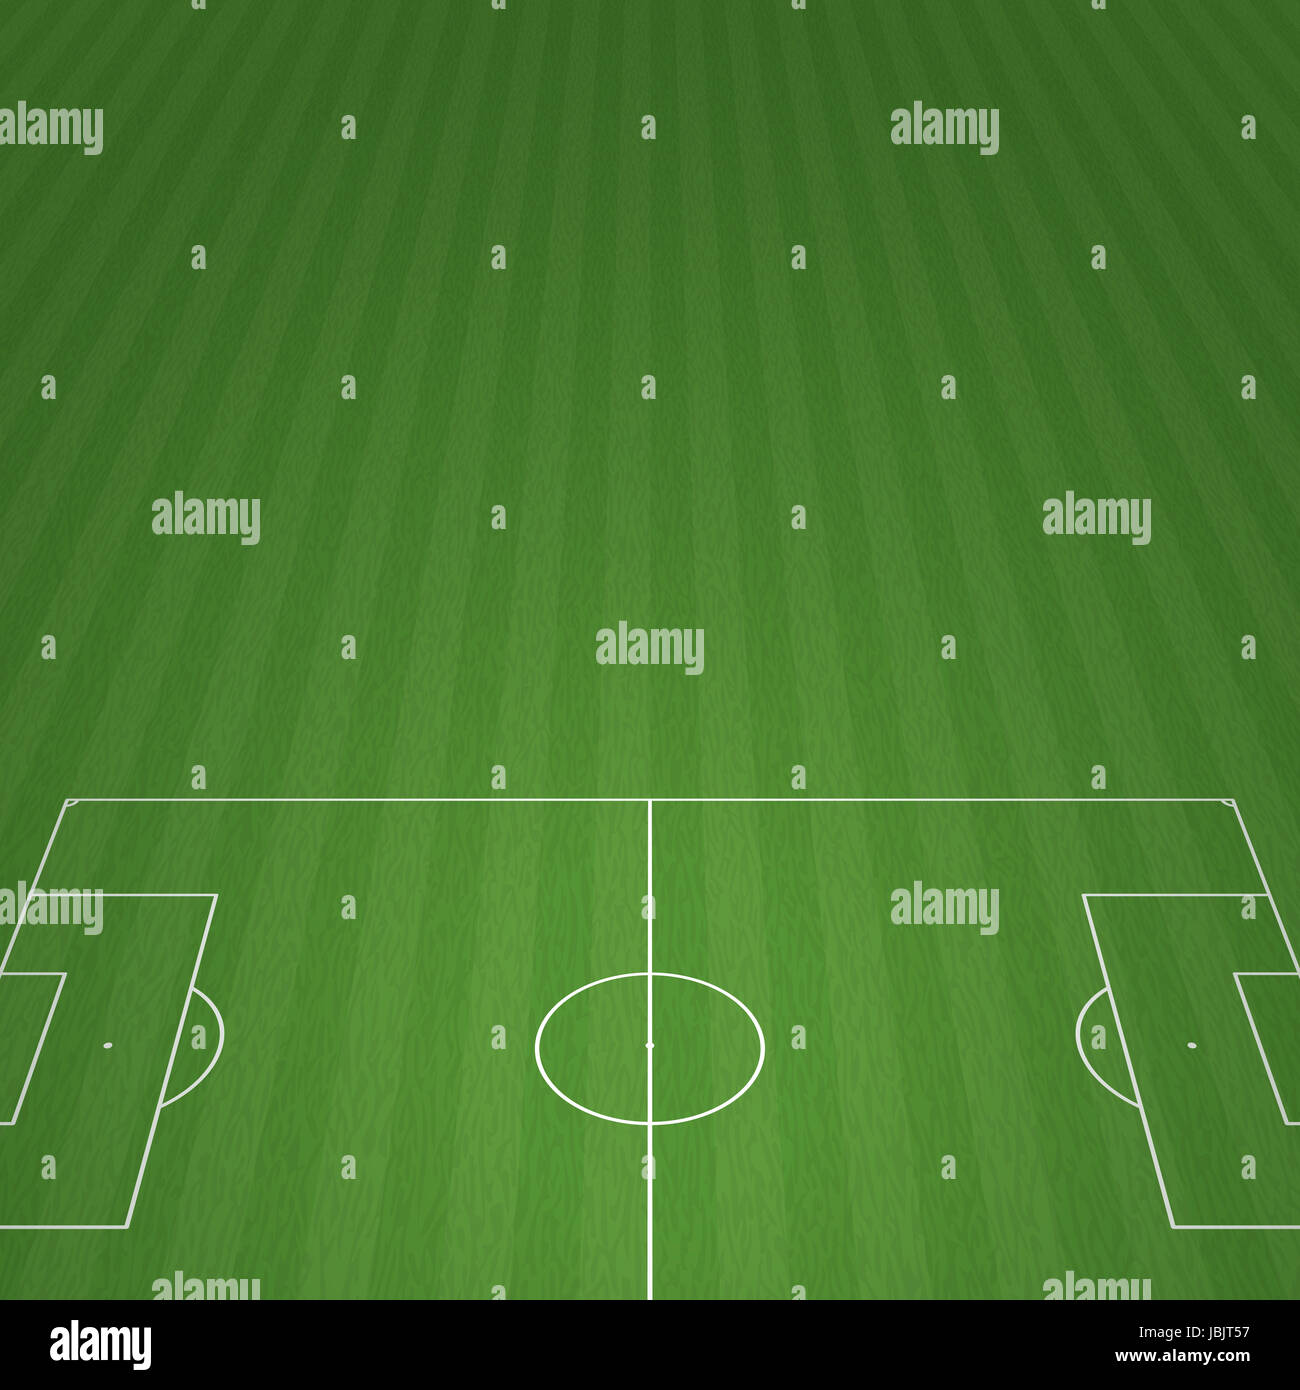 football field 3-D background vector illustration Stock Photo